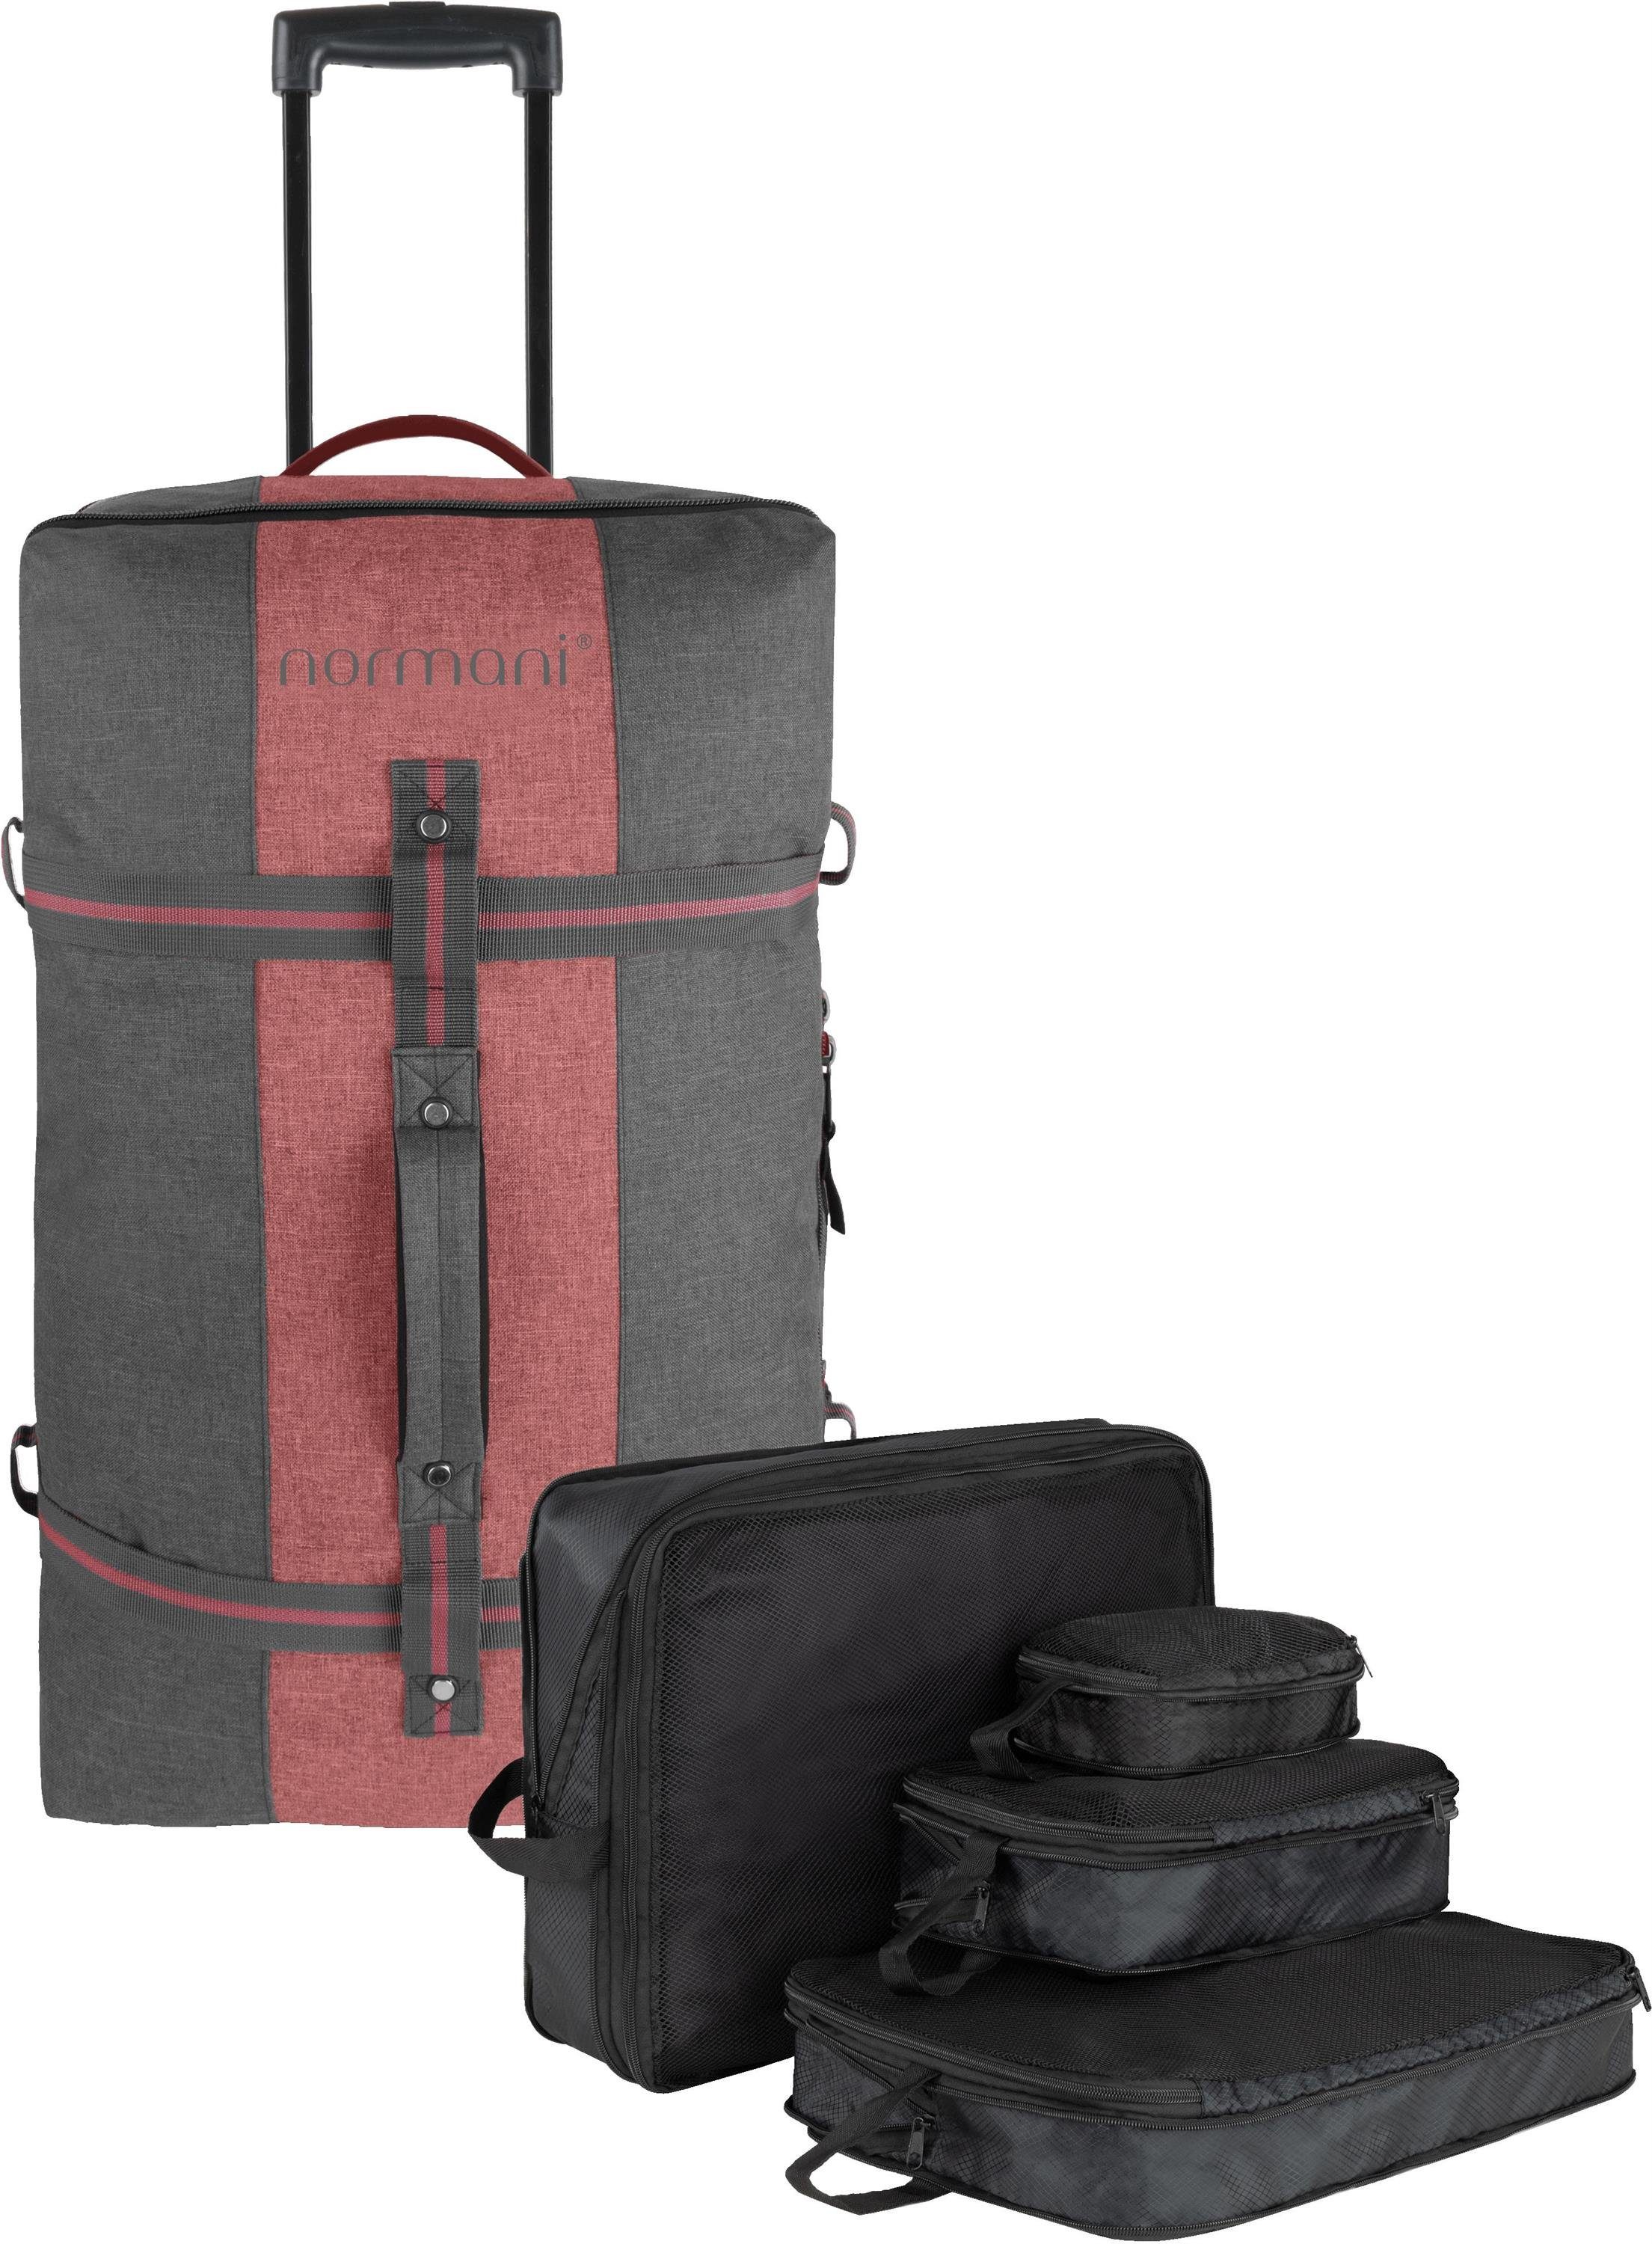 normani L Aurori Reisetasche 4 125, Dunkelgrau/Rot mit mit Reisetasche Kleidertaschen 125 Große Reisetasche Rollen